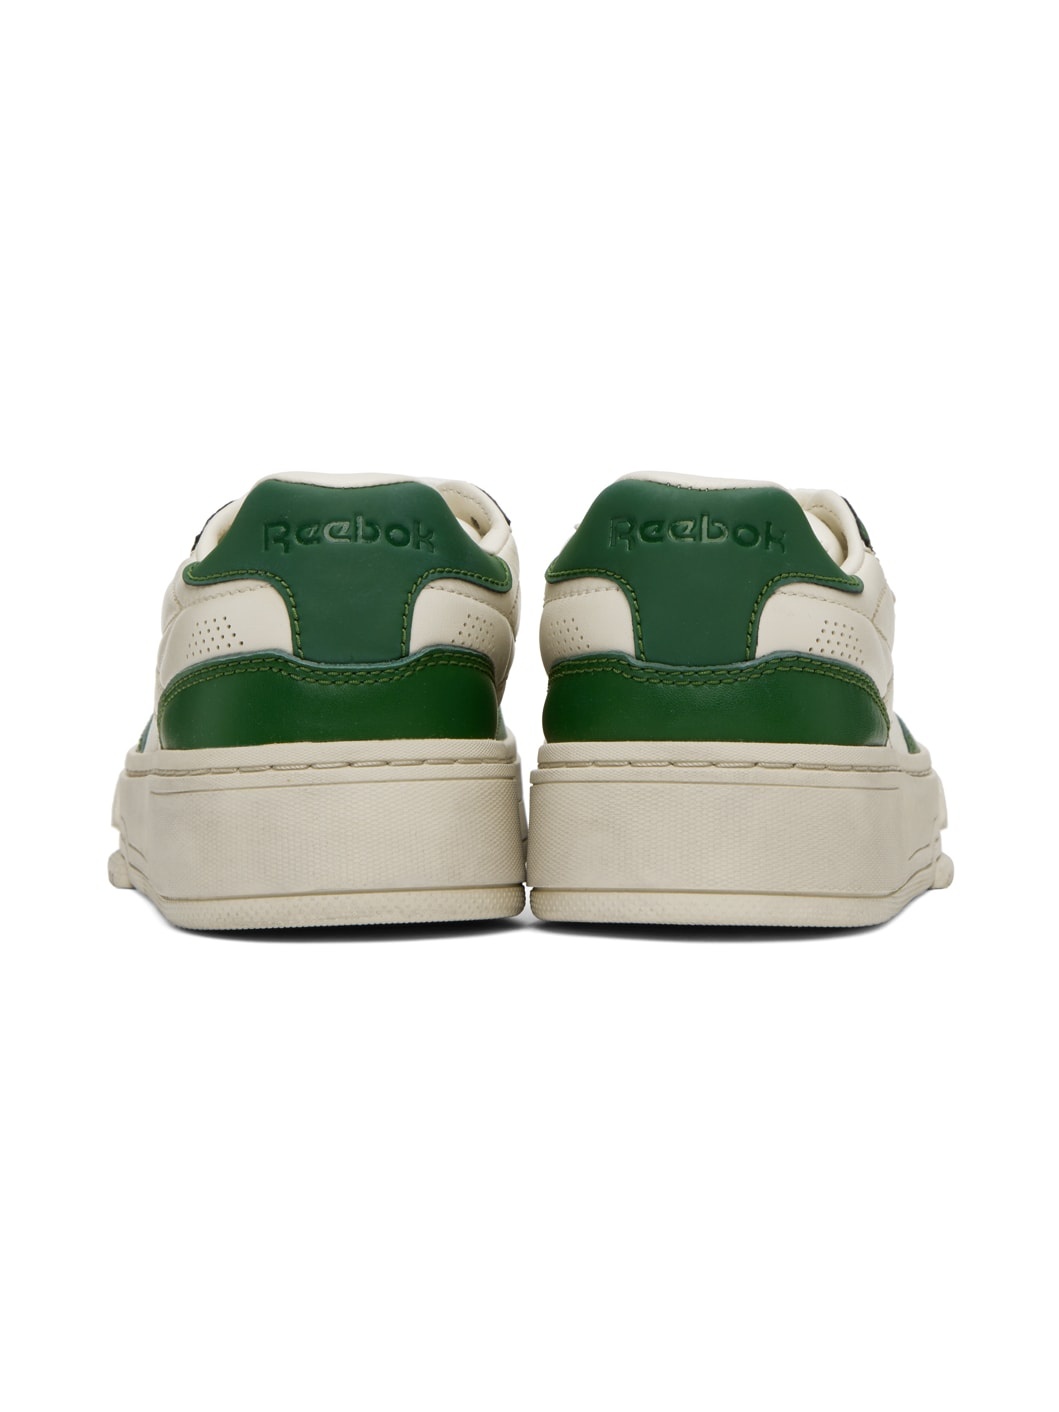 Off-White & Green Club C LTD Sneakers - 2